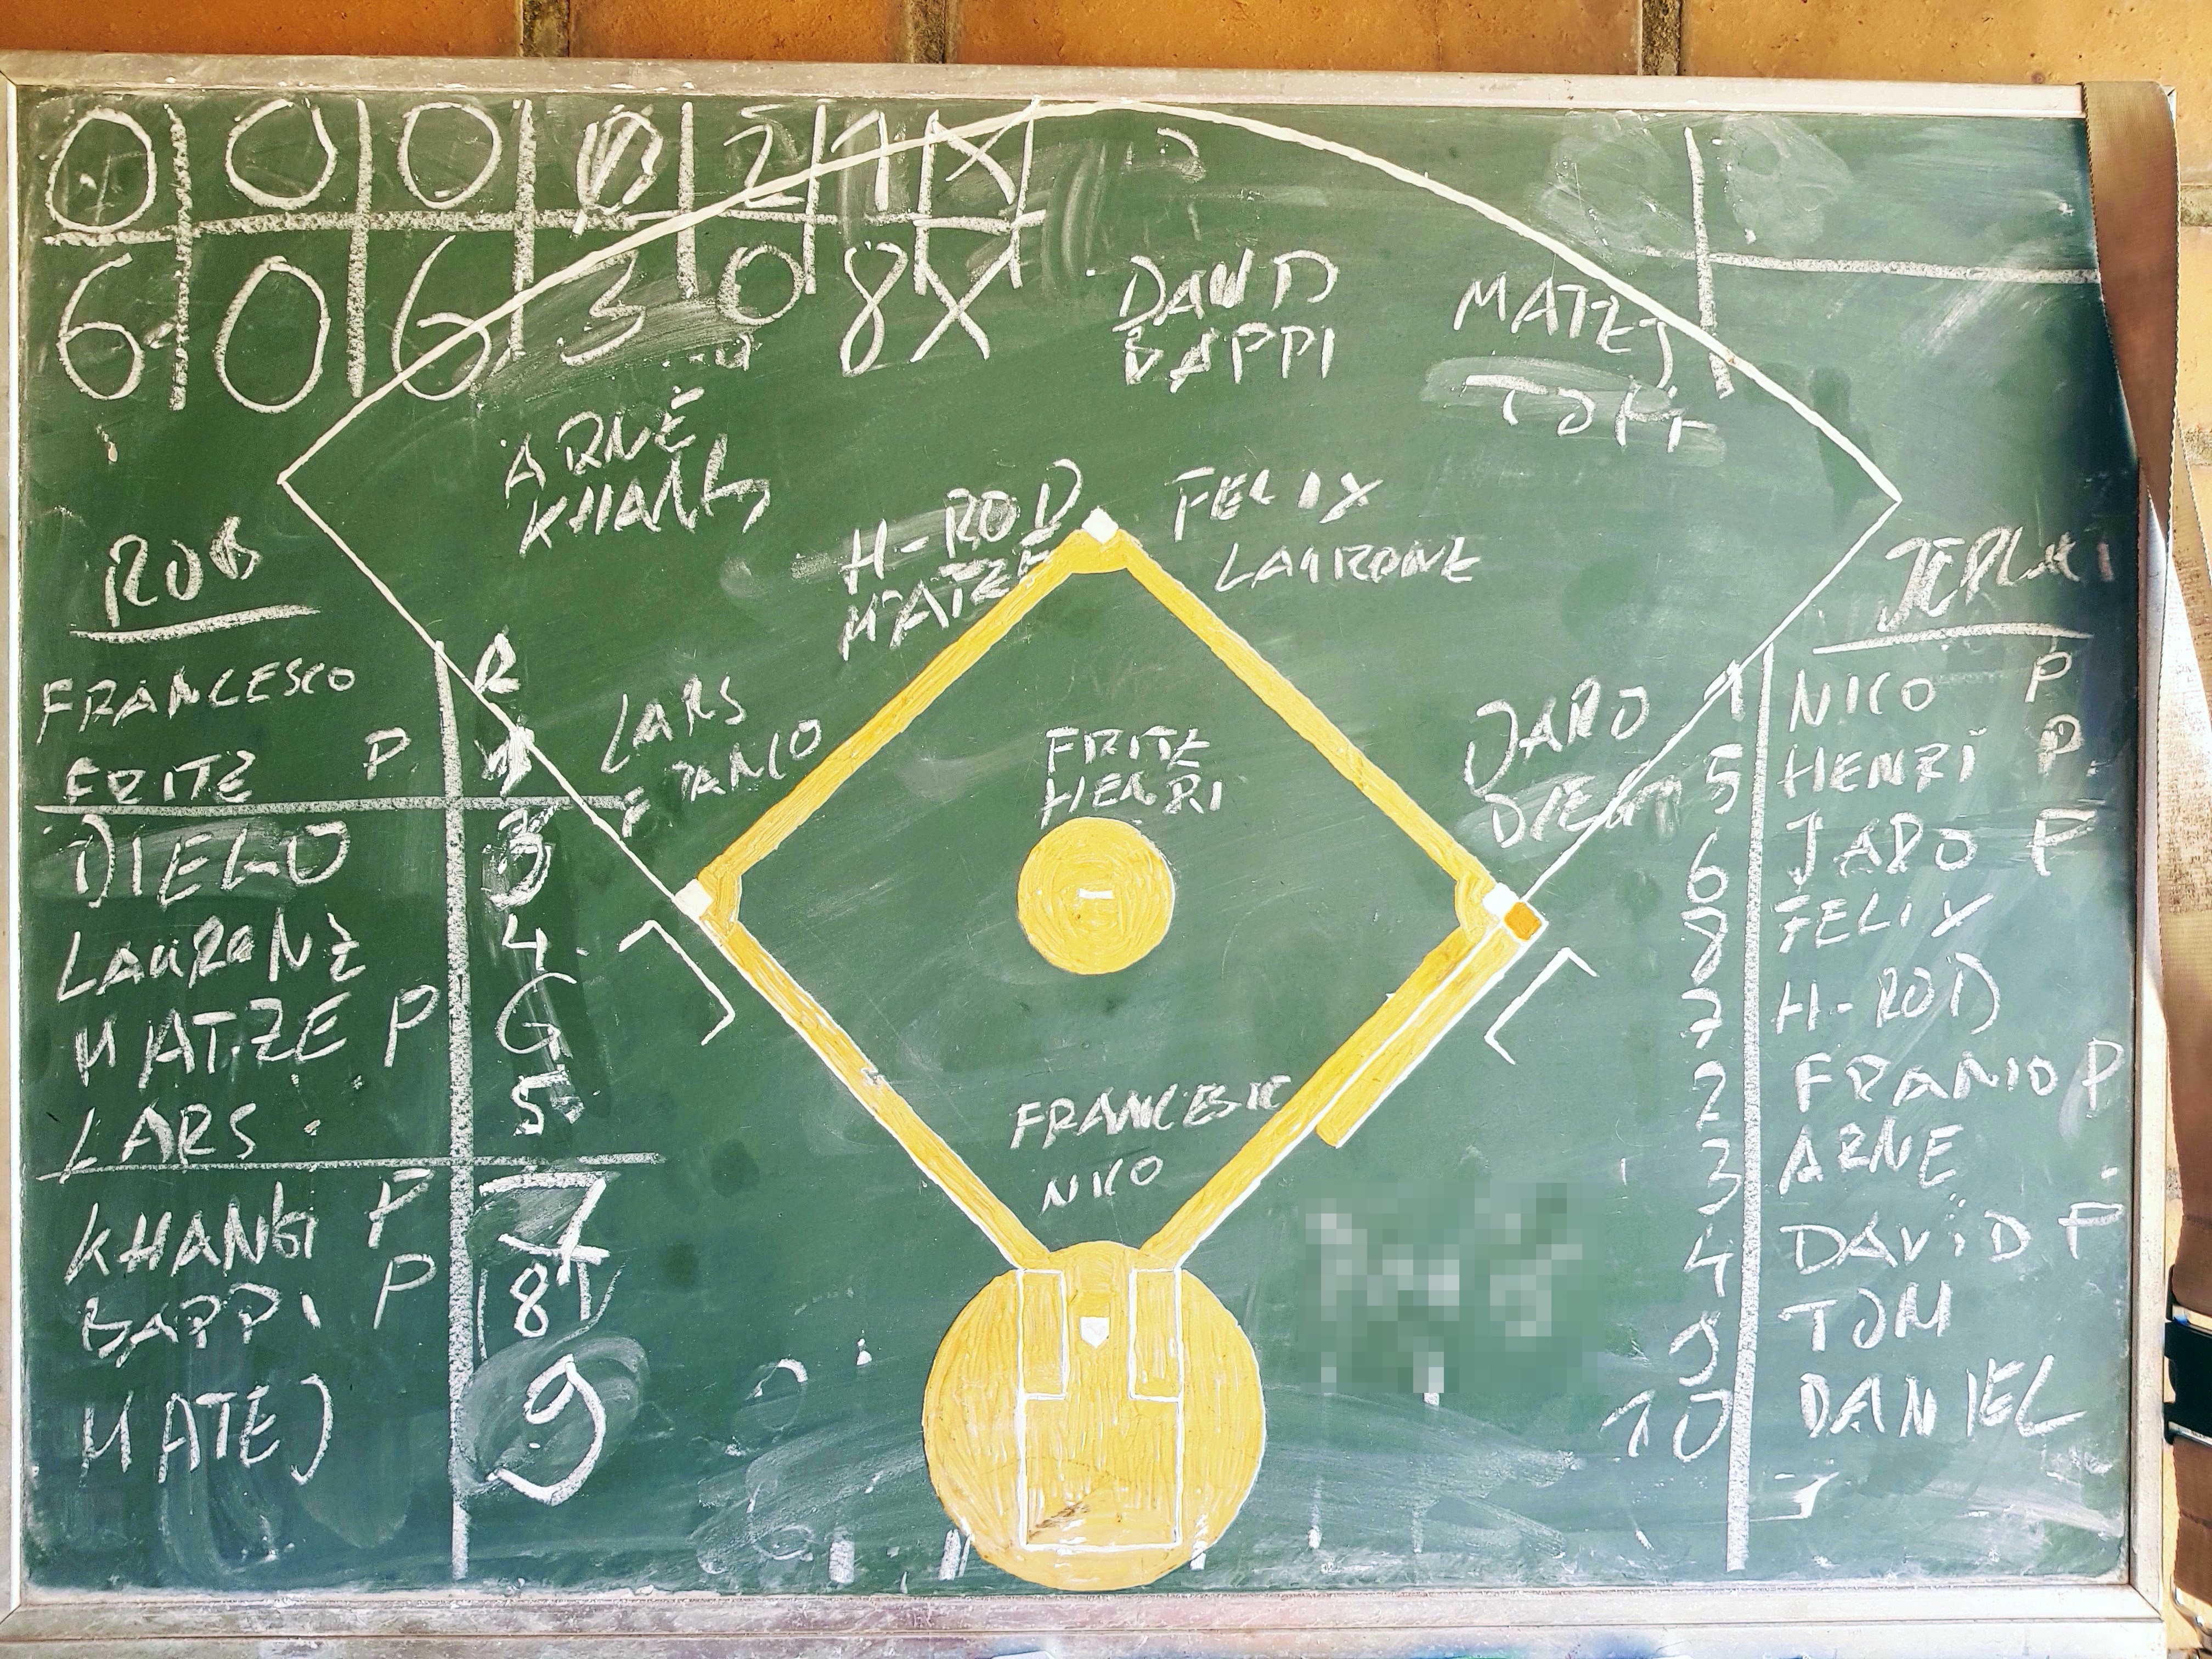 Baseball scoreboard with team lineups